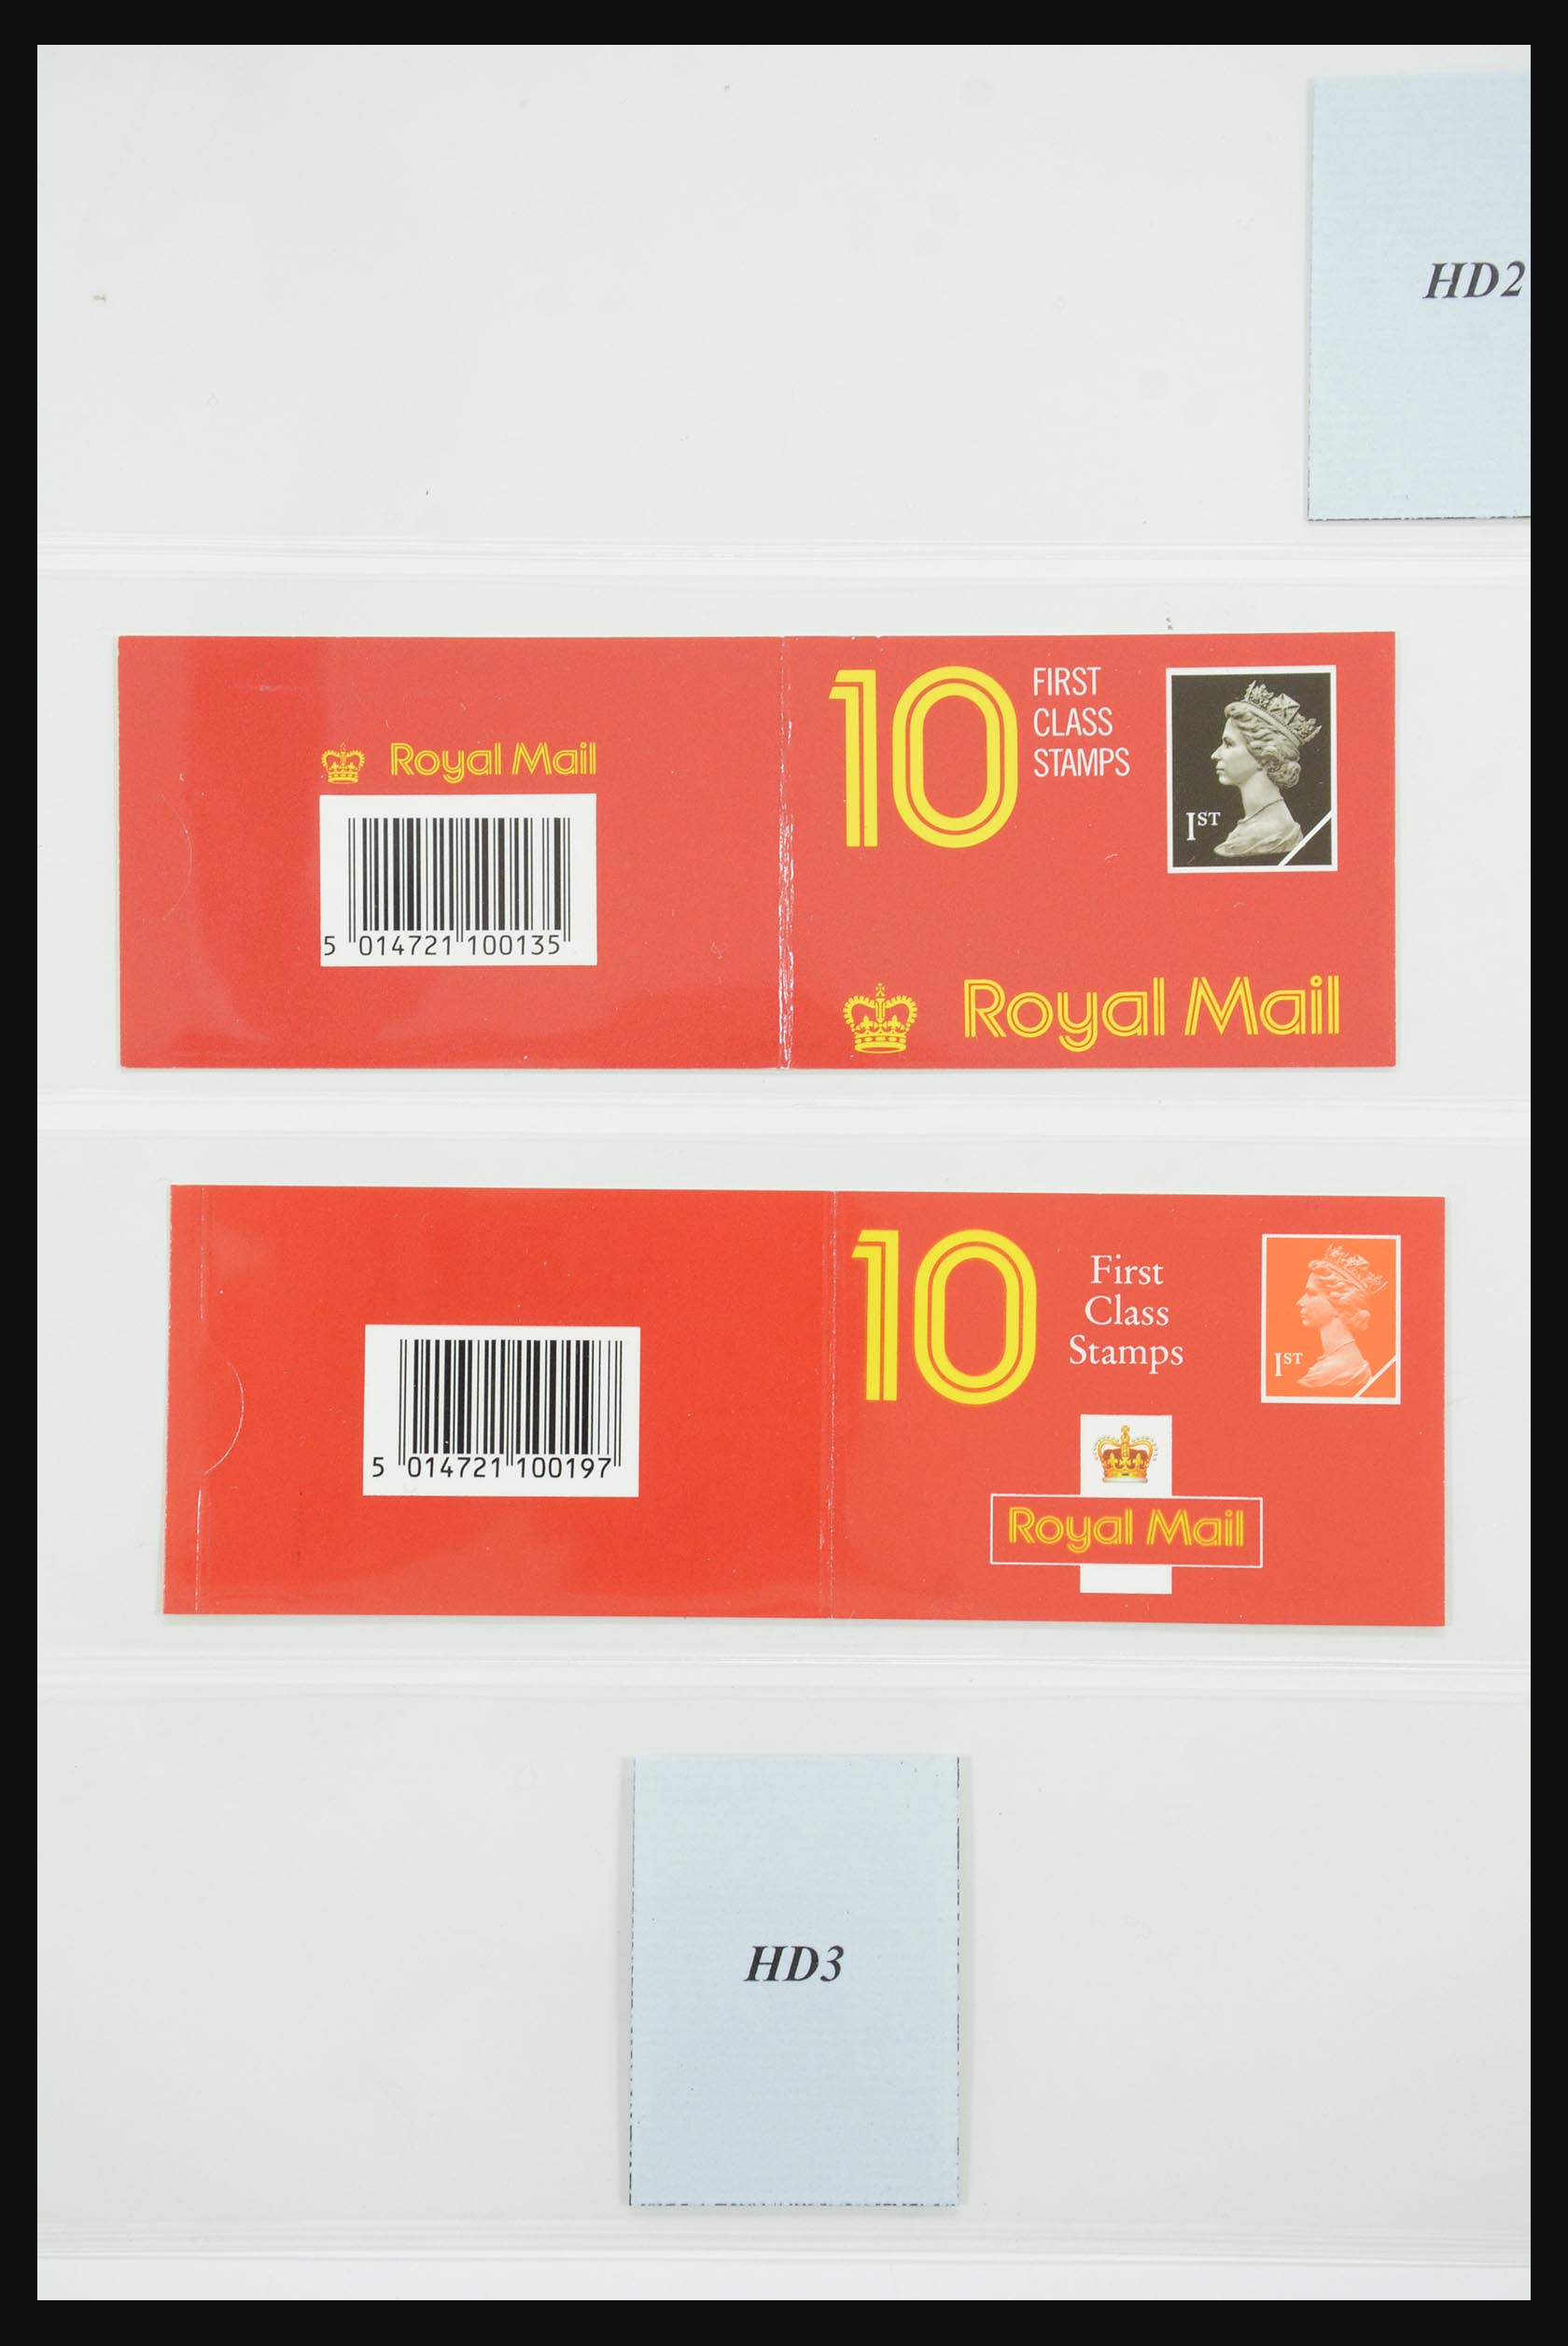 31960 095 - 31960 Great Britain stampbooklets 1989-2000.